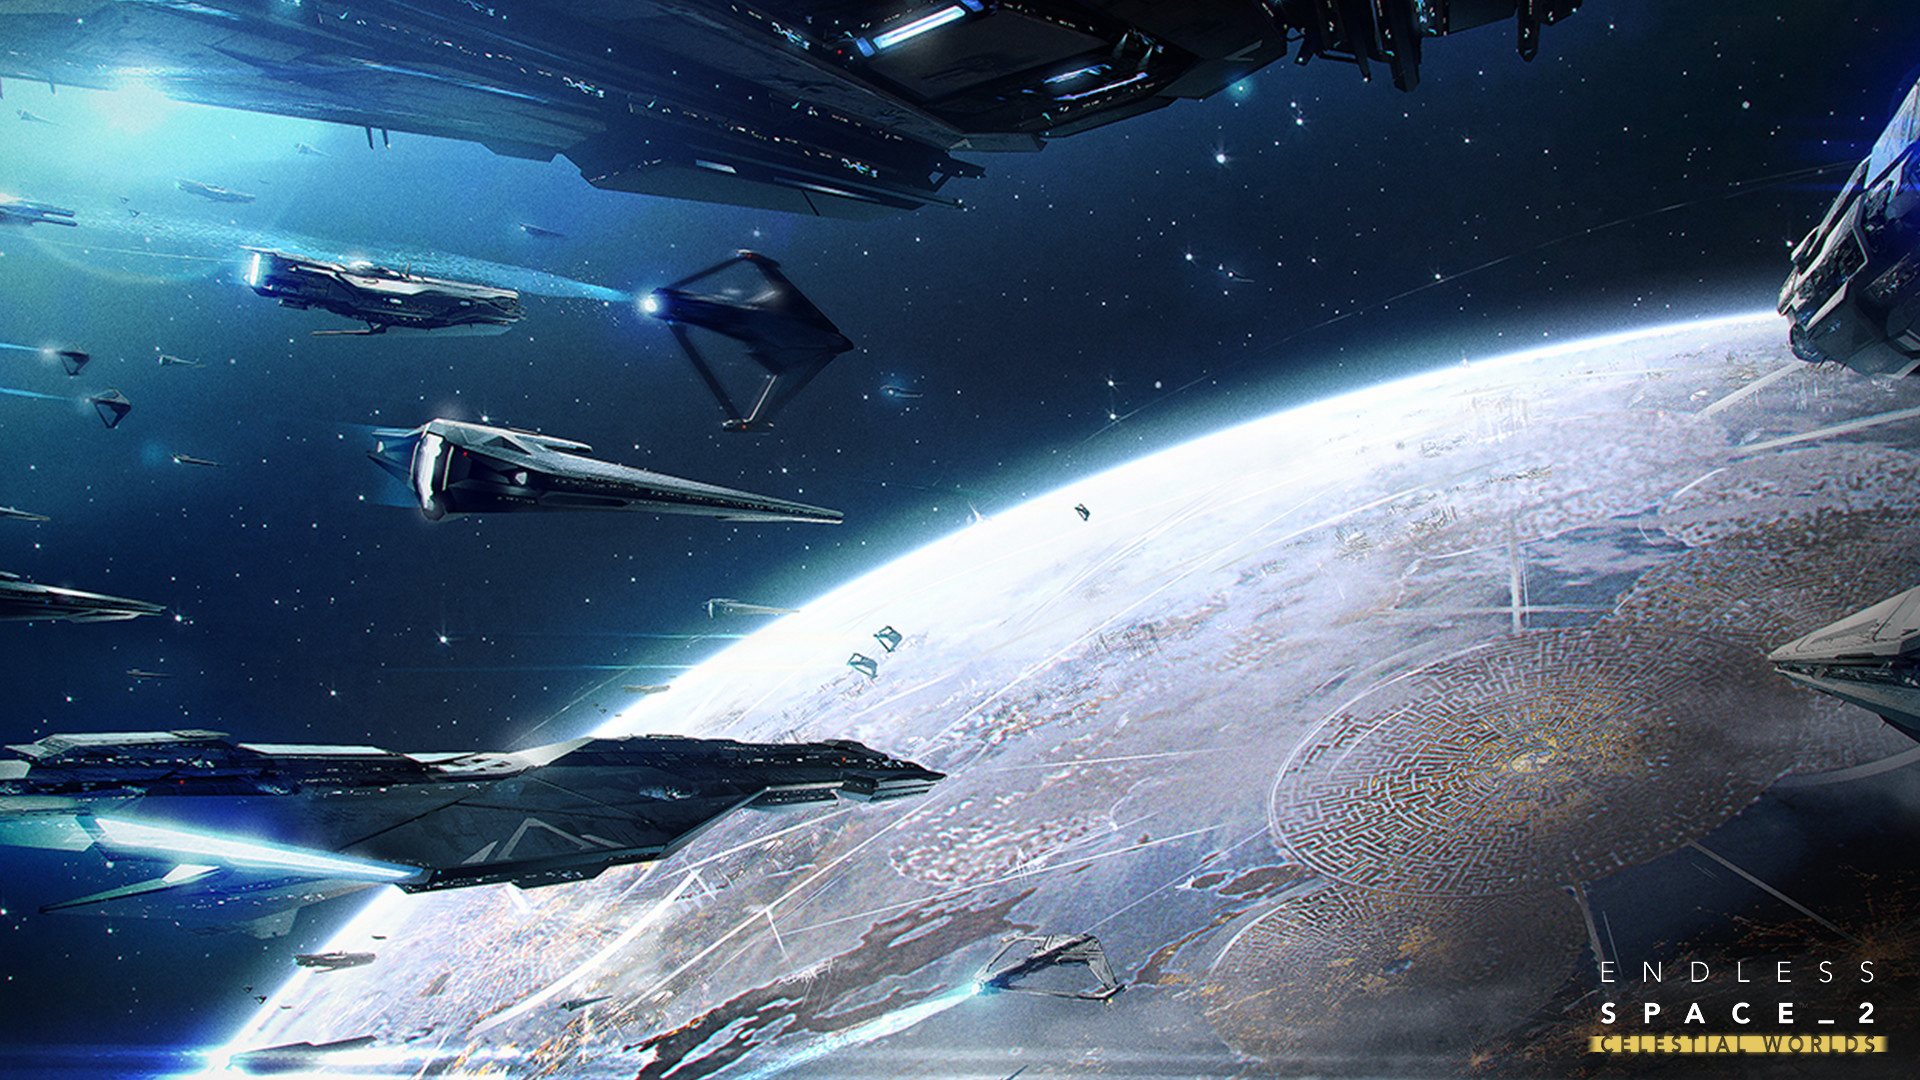 Endless Space 2 - Celestial Worlds DLC Steam CD Key